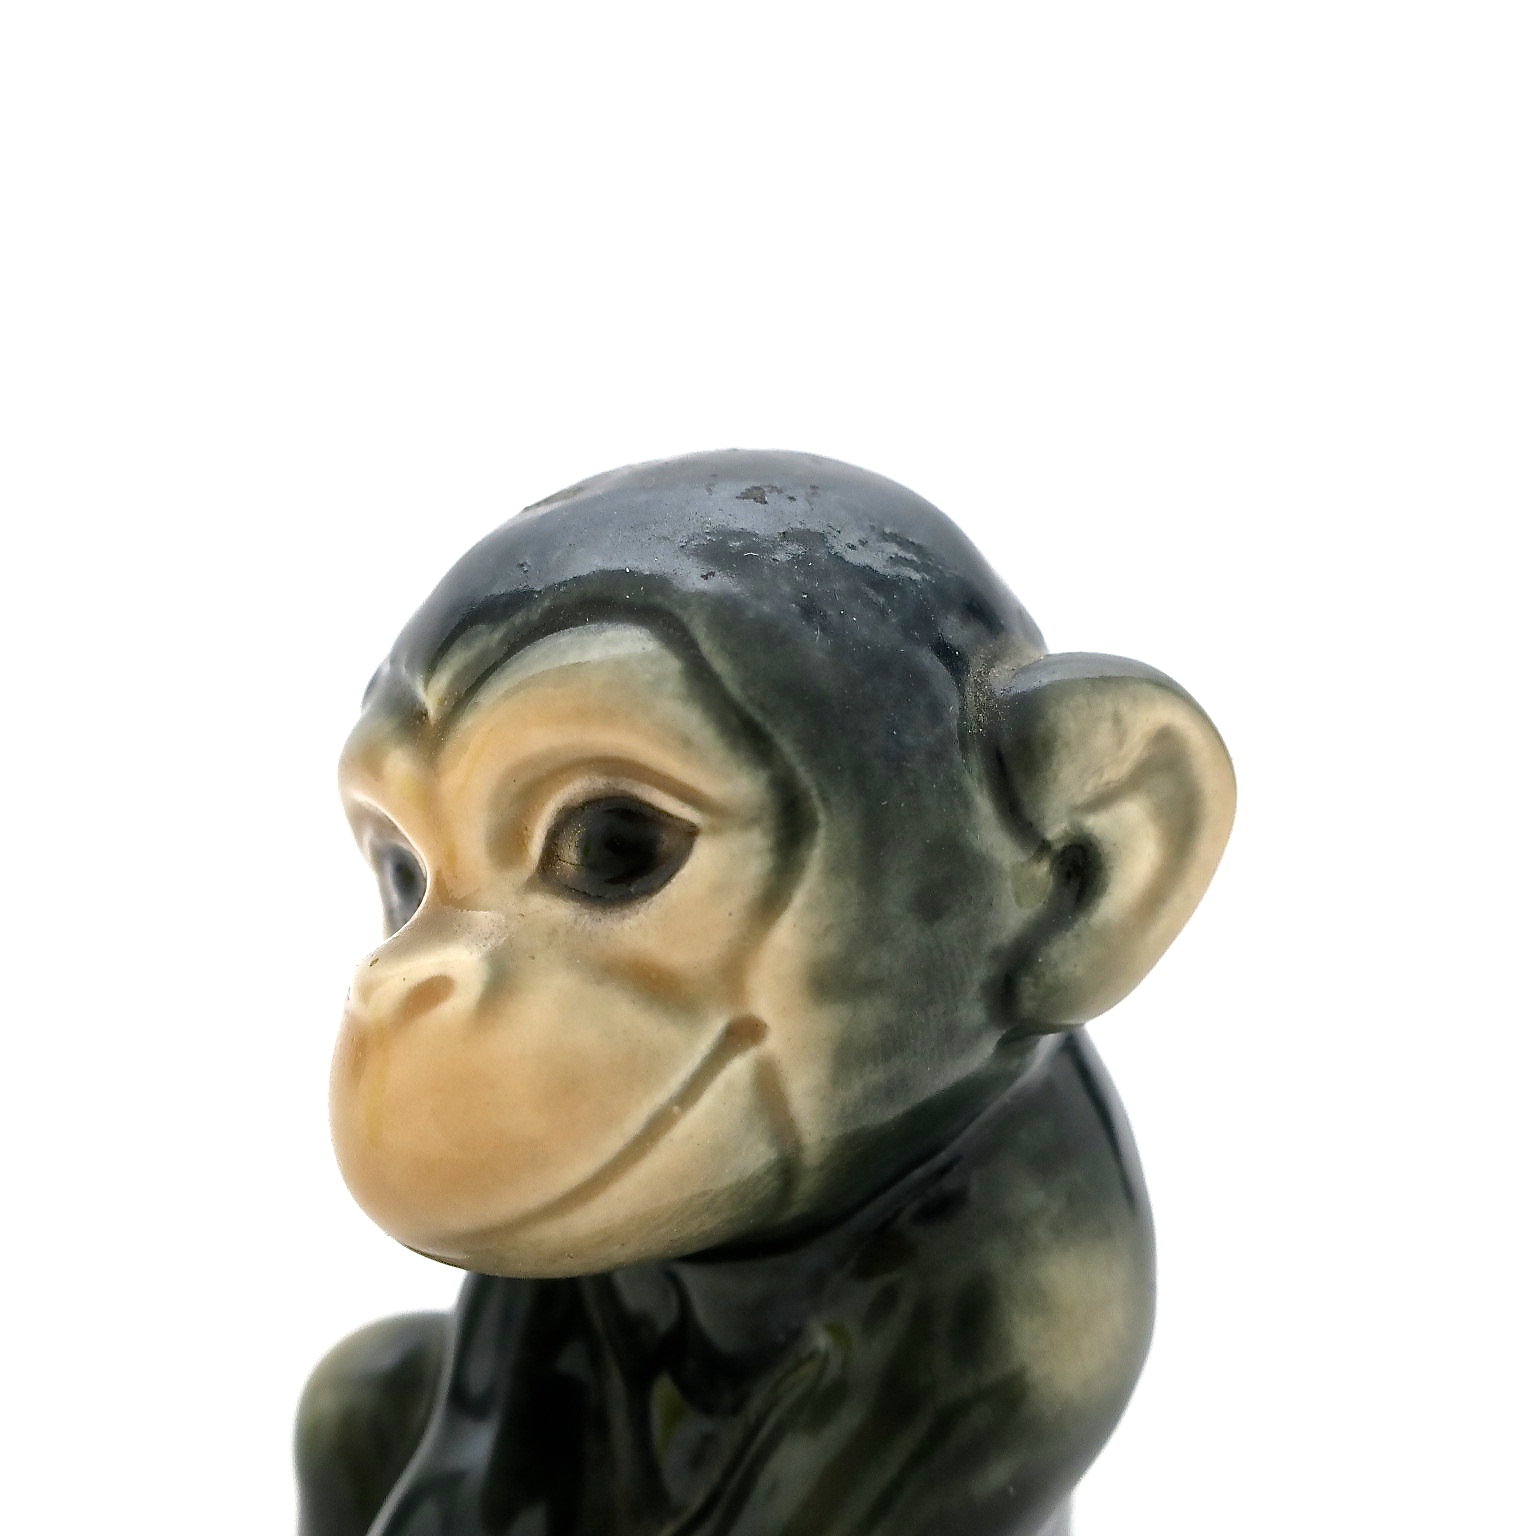 affe schimpanse chimpanzee goebel vintage keramik seele kaufmuseum ceramique vintage design interiordetail inneneinrichtung